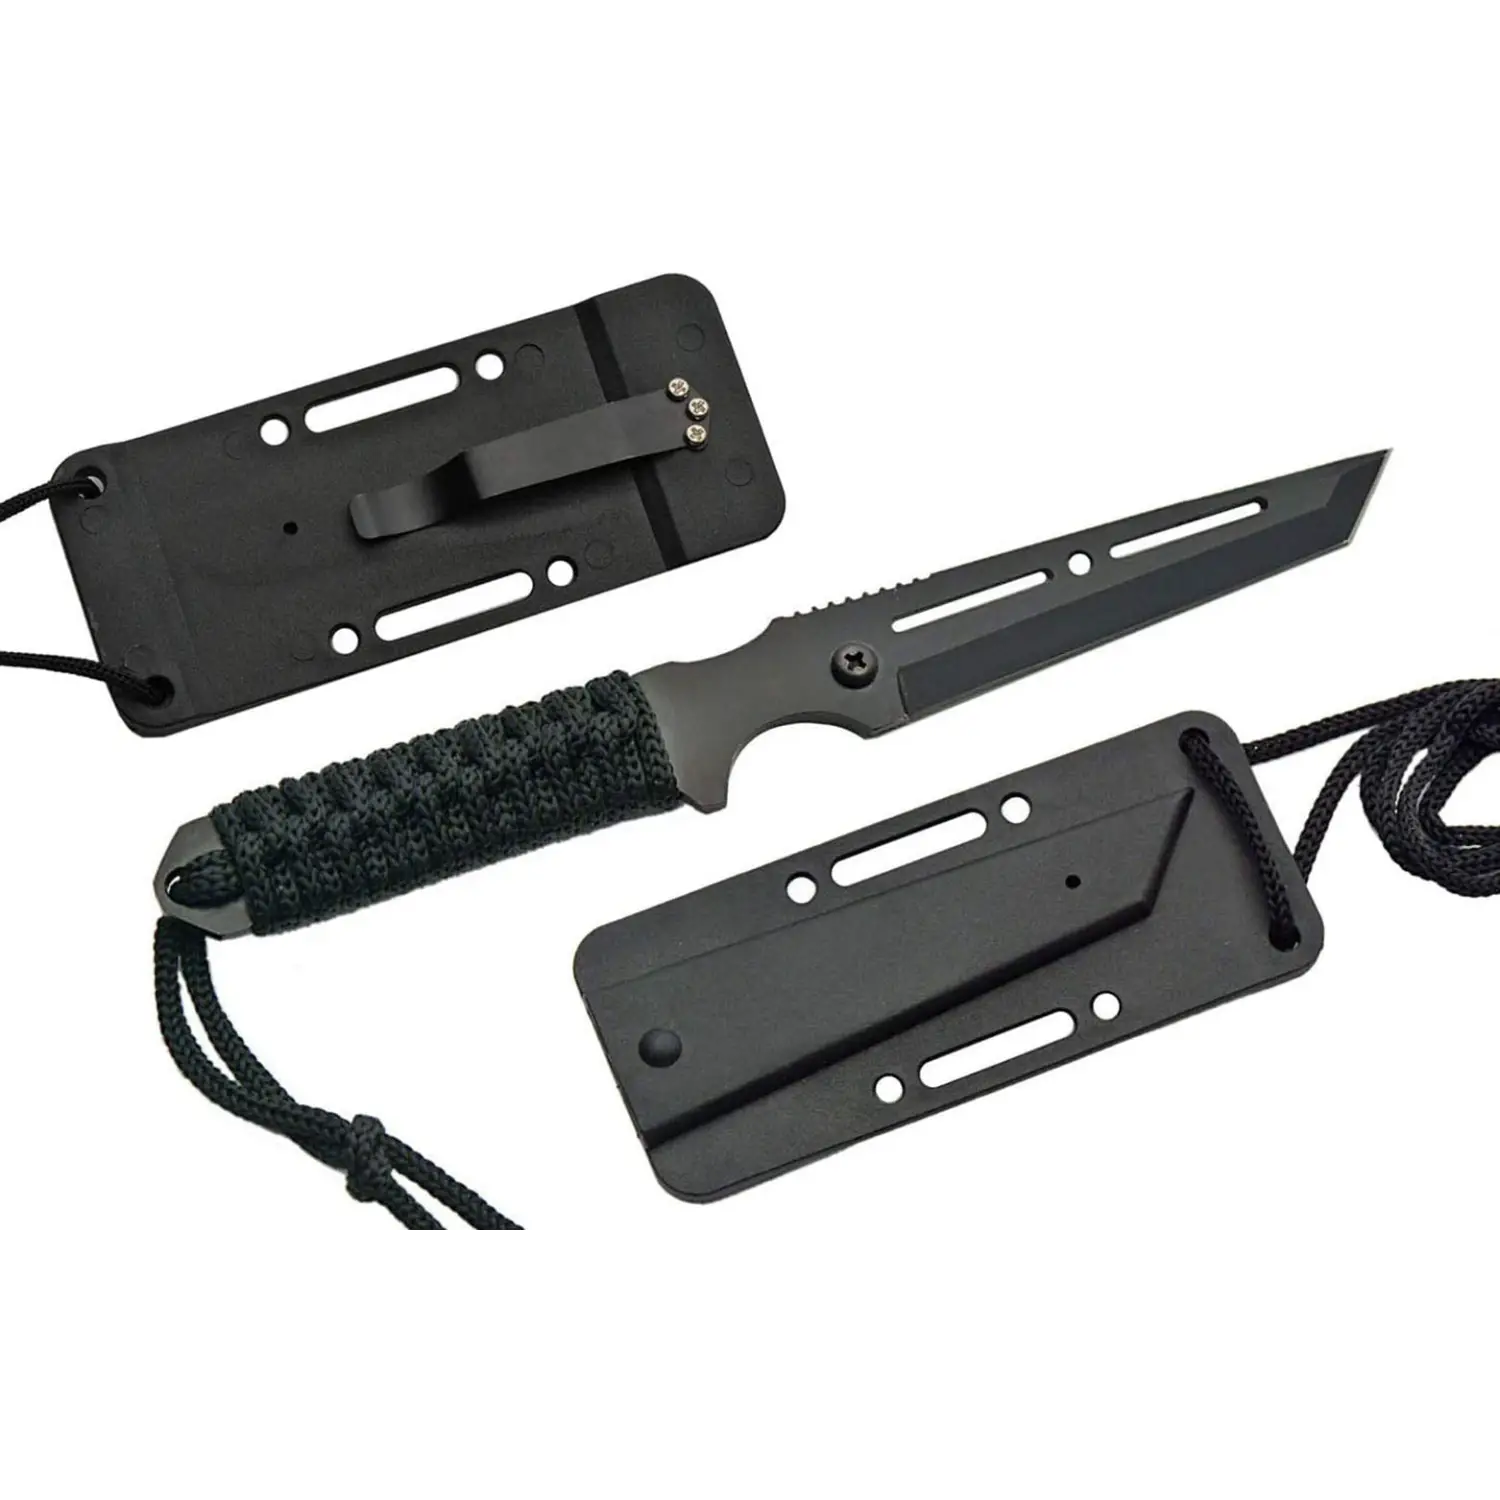 Exclusive 8 Slick Black Stainless Steel Sniper Knife 210992